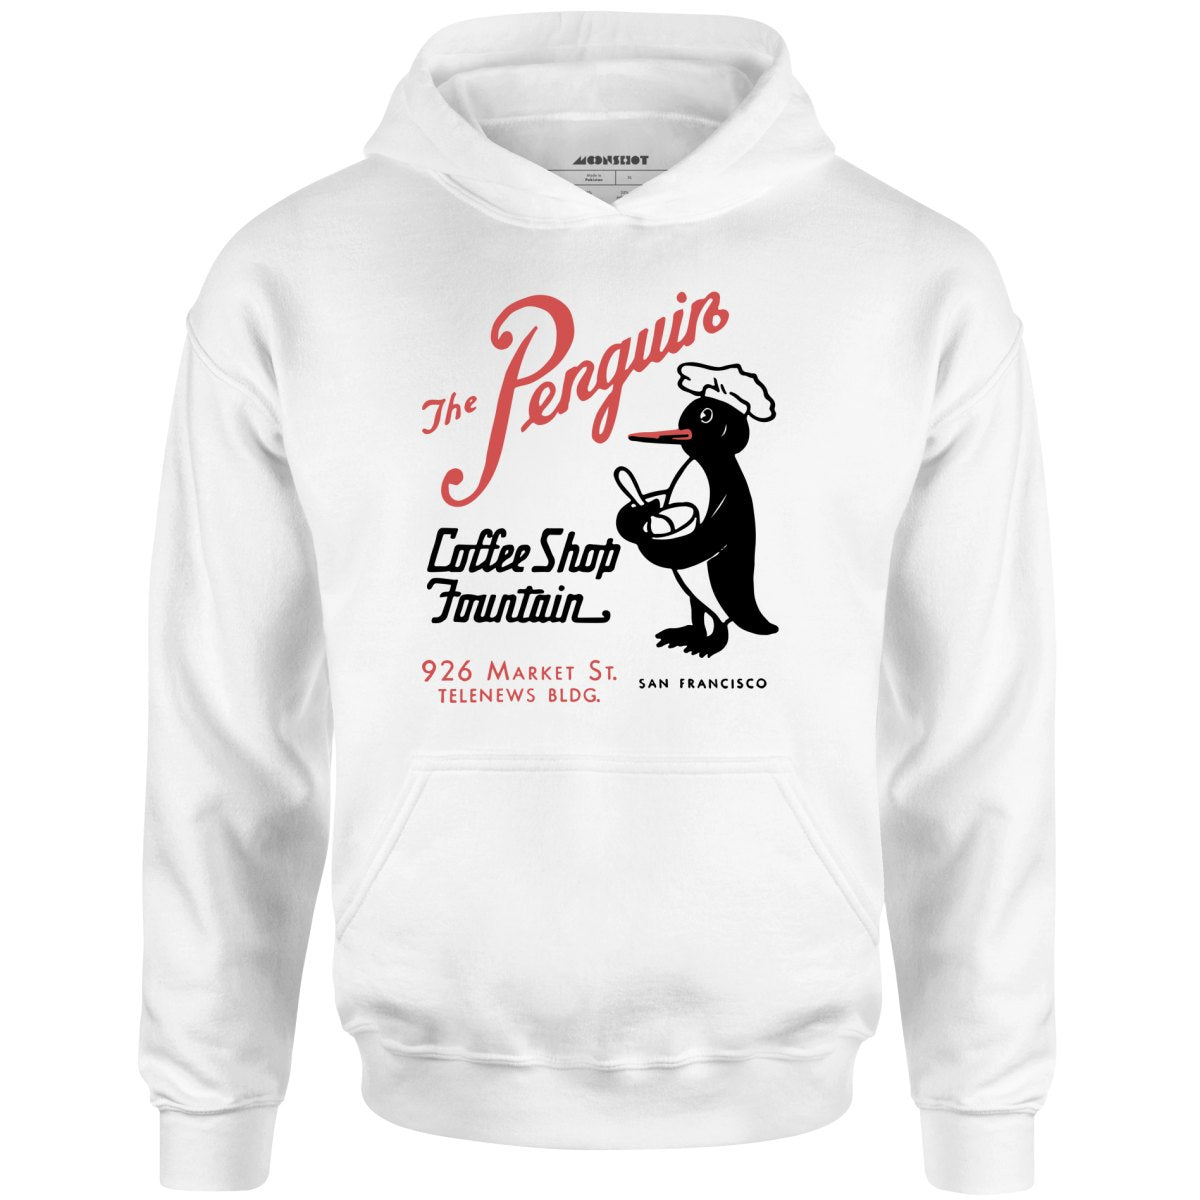 The Penguin - San Francisco, CA - Vintage Restaurant - Unisex Hoodie